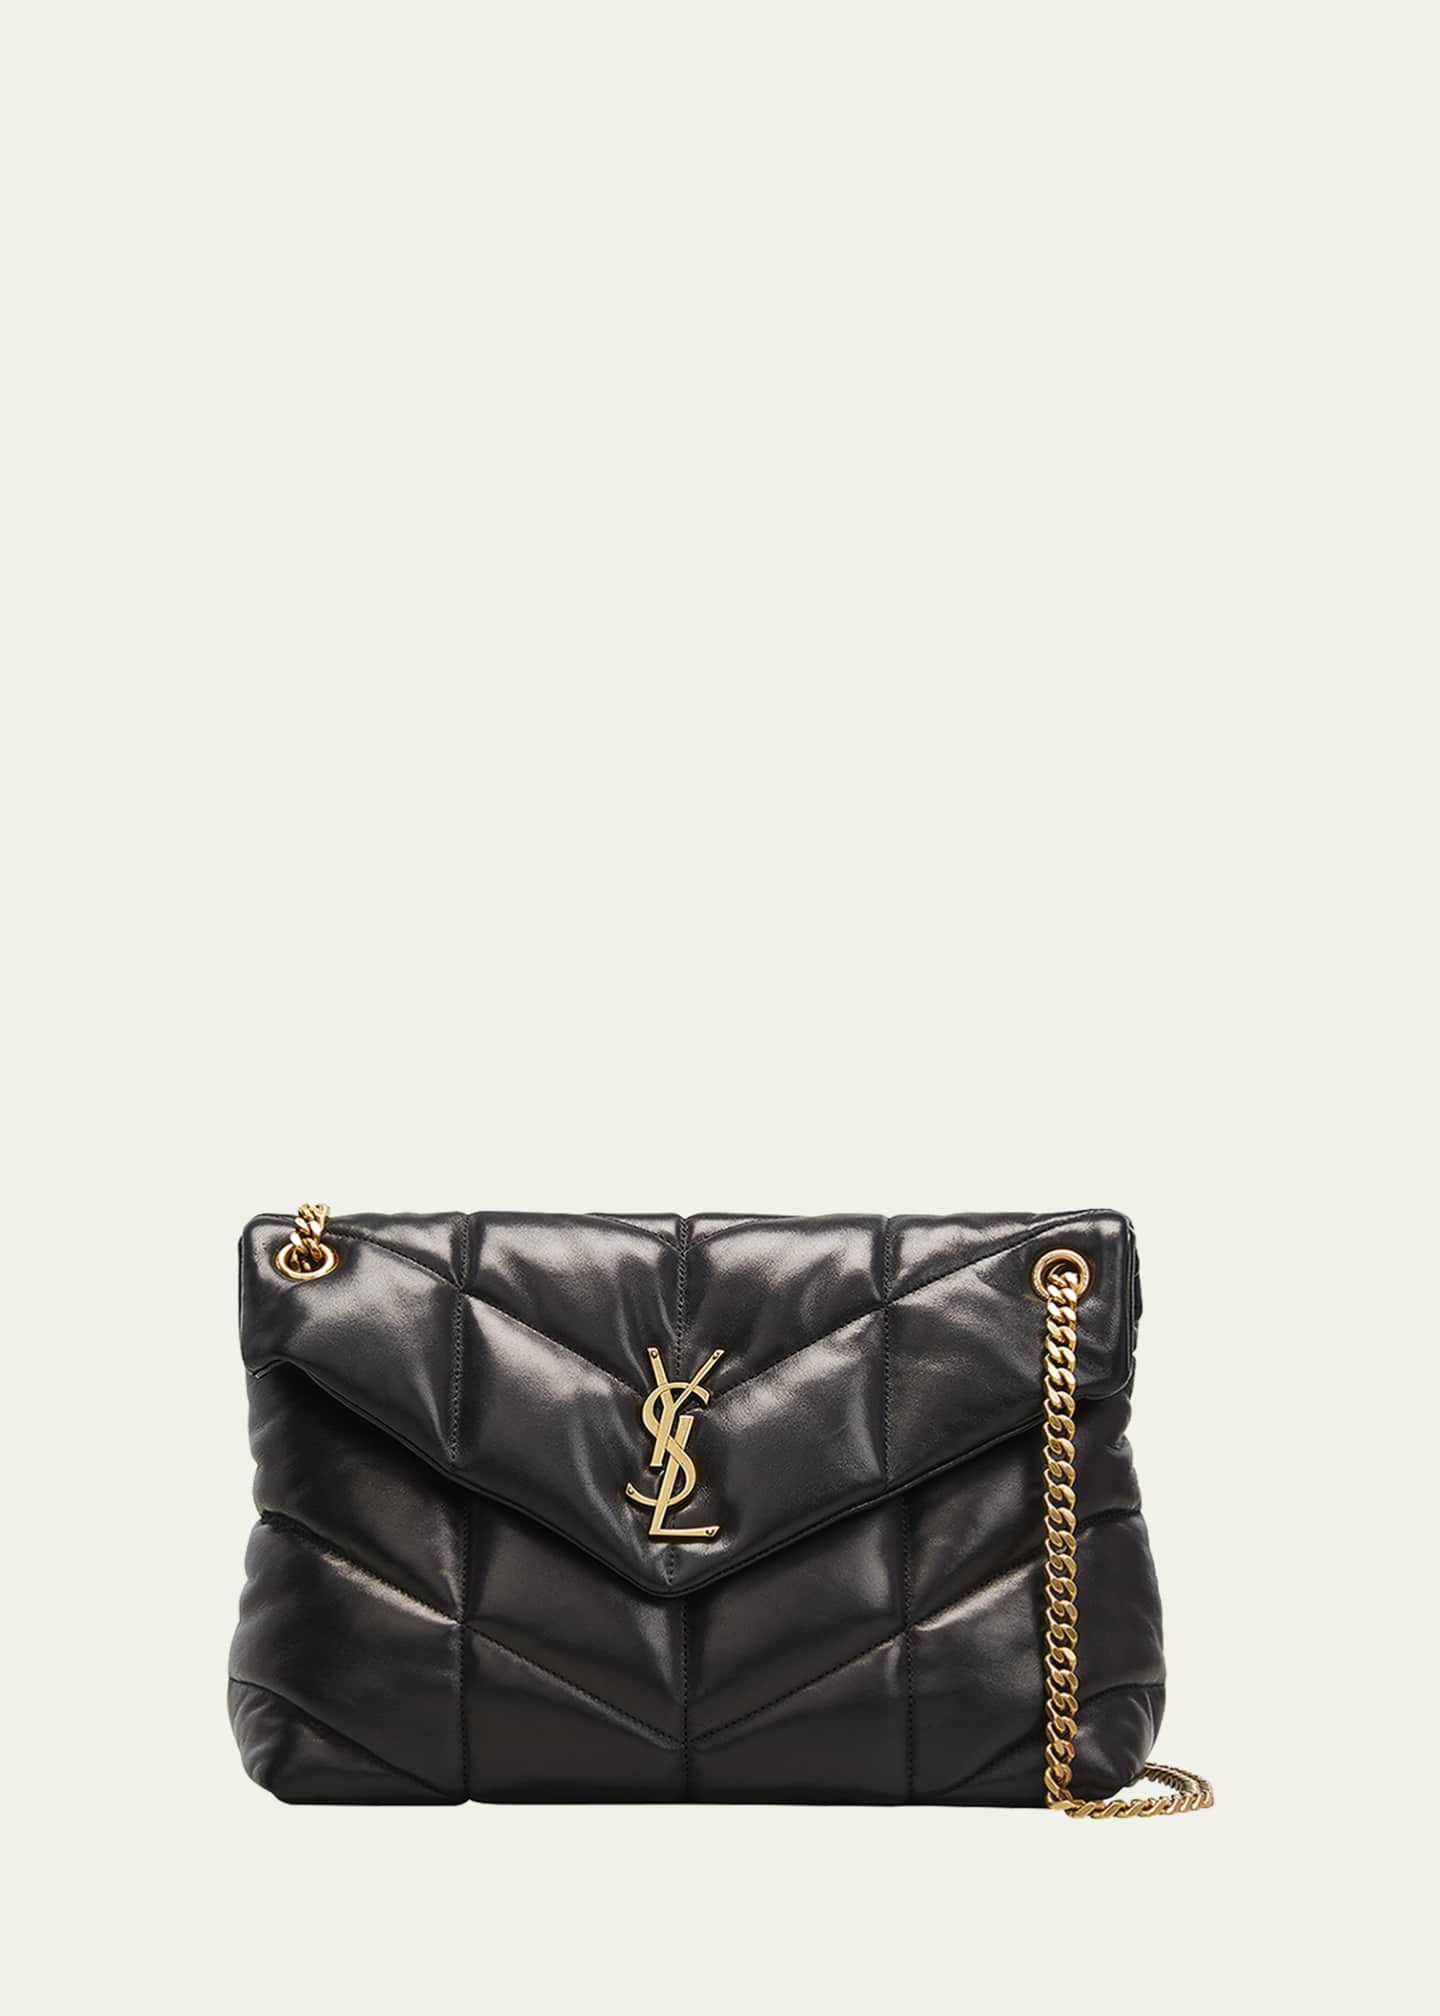 YSL puffer in black: what hw? : r/handbags